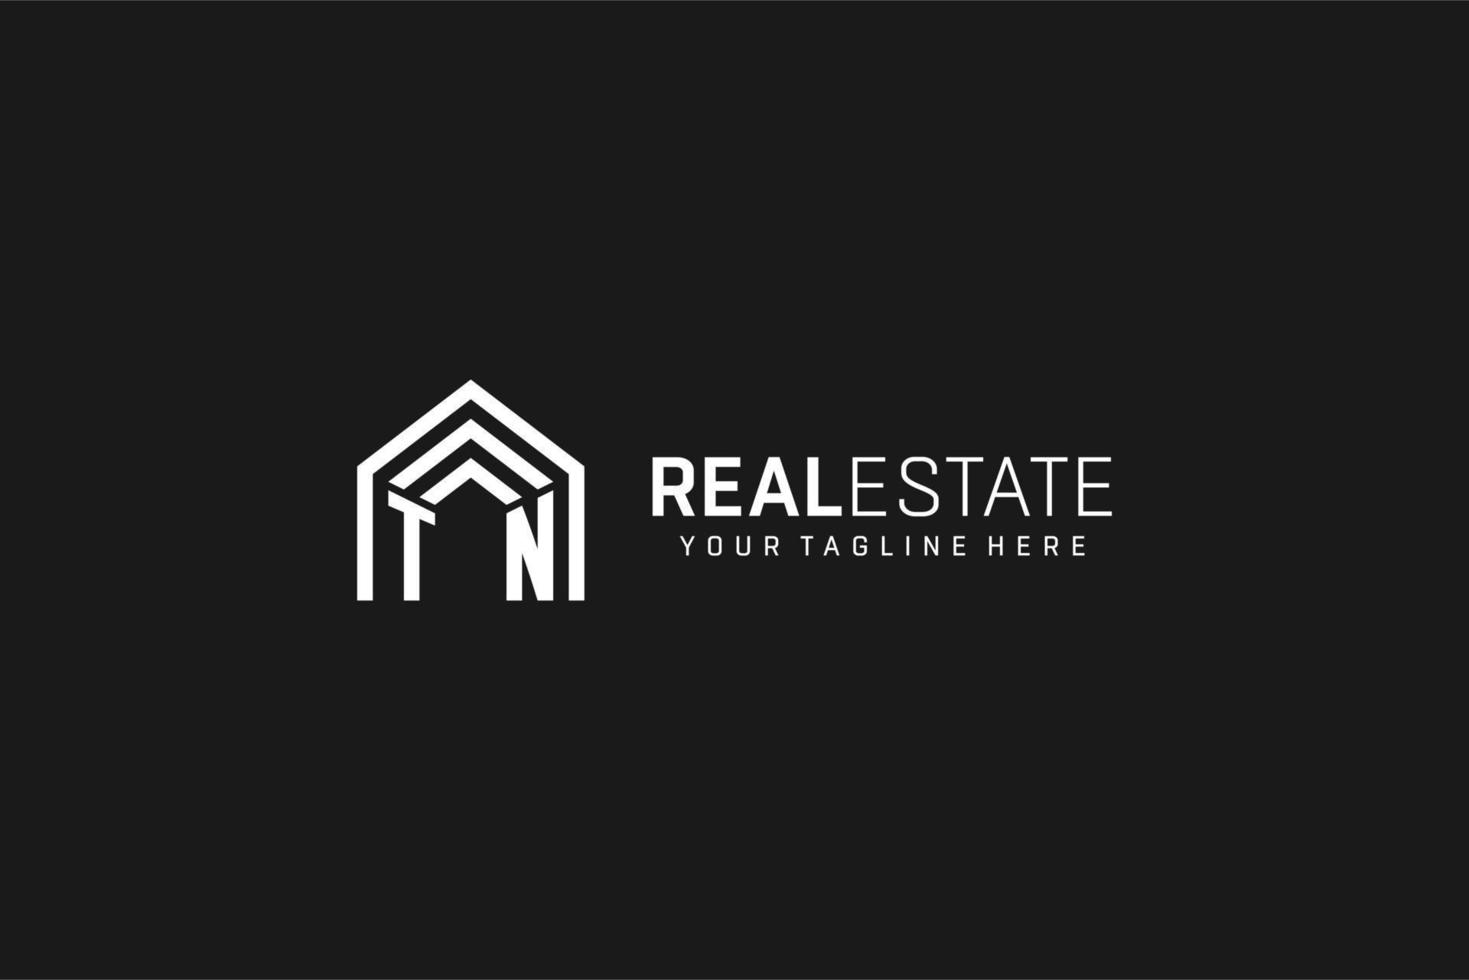 Letter TN house roof shape logo, creative real estate monogram logo style vector